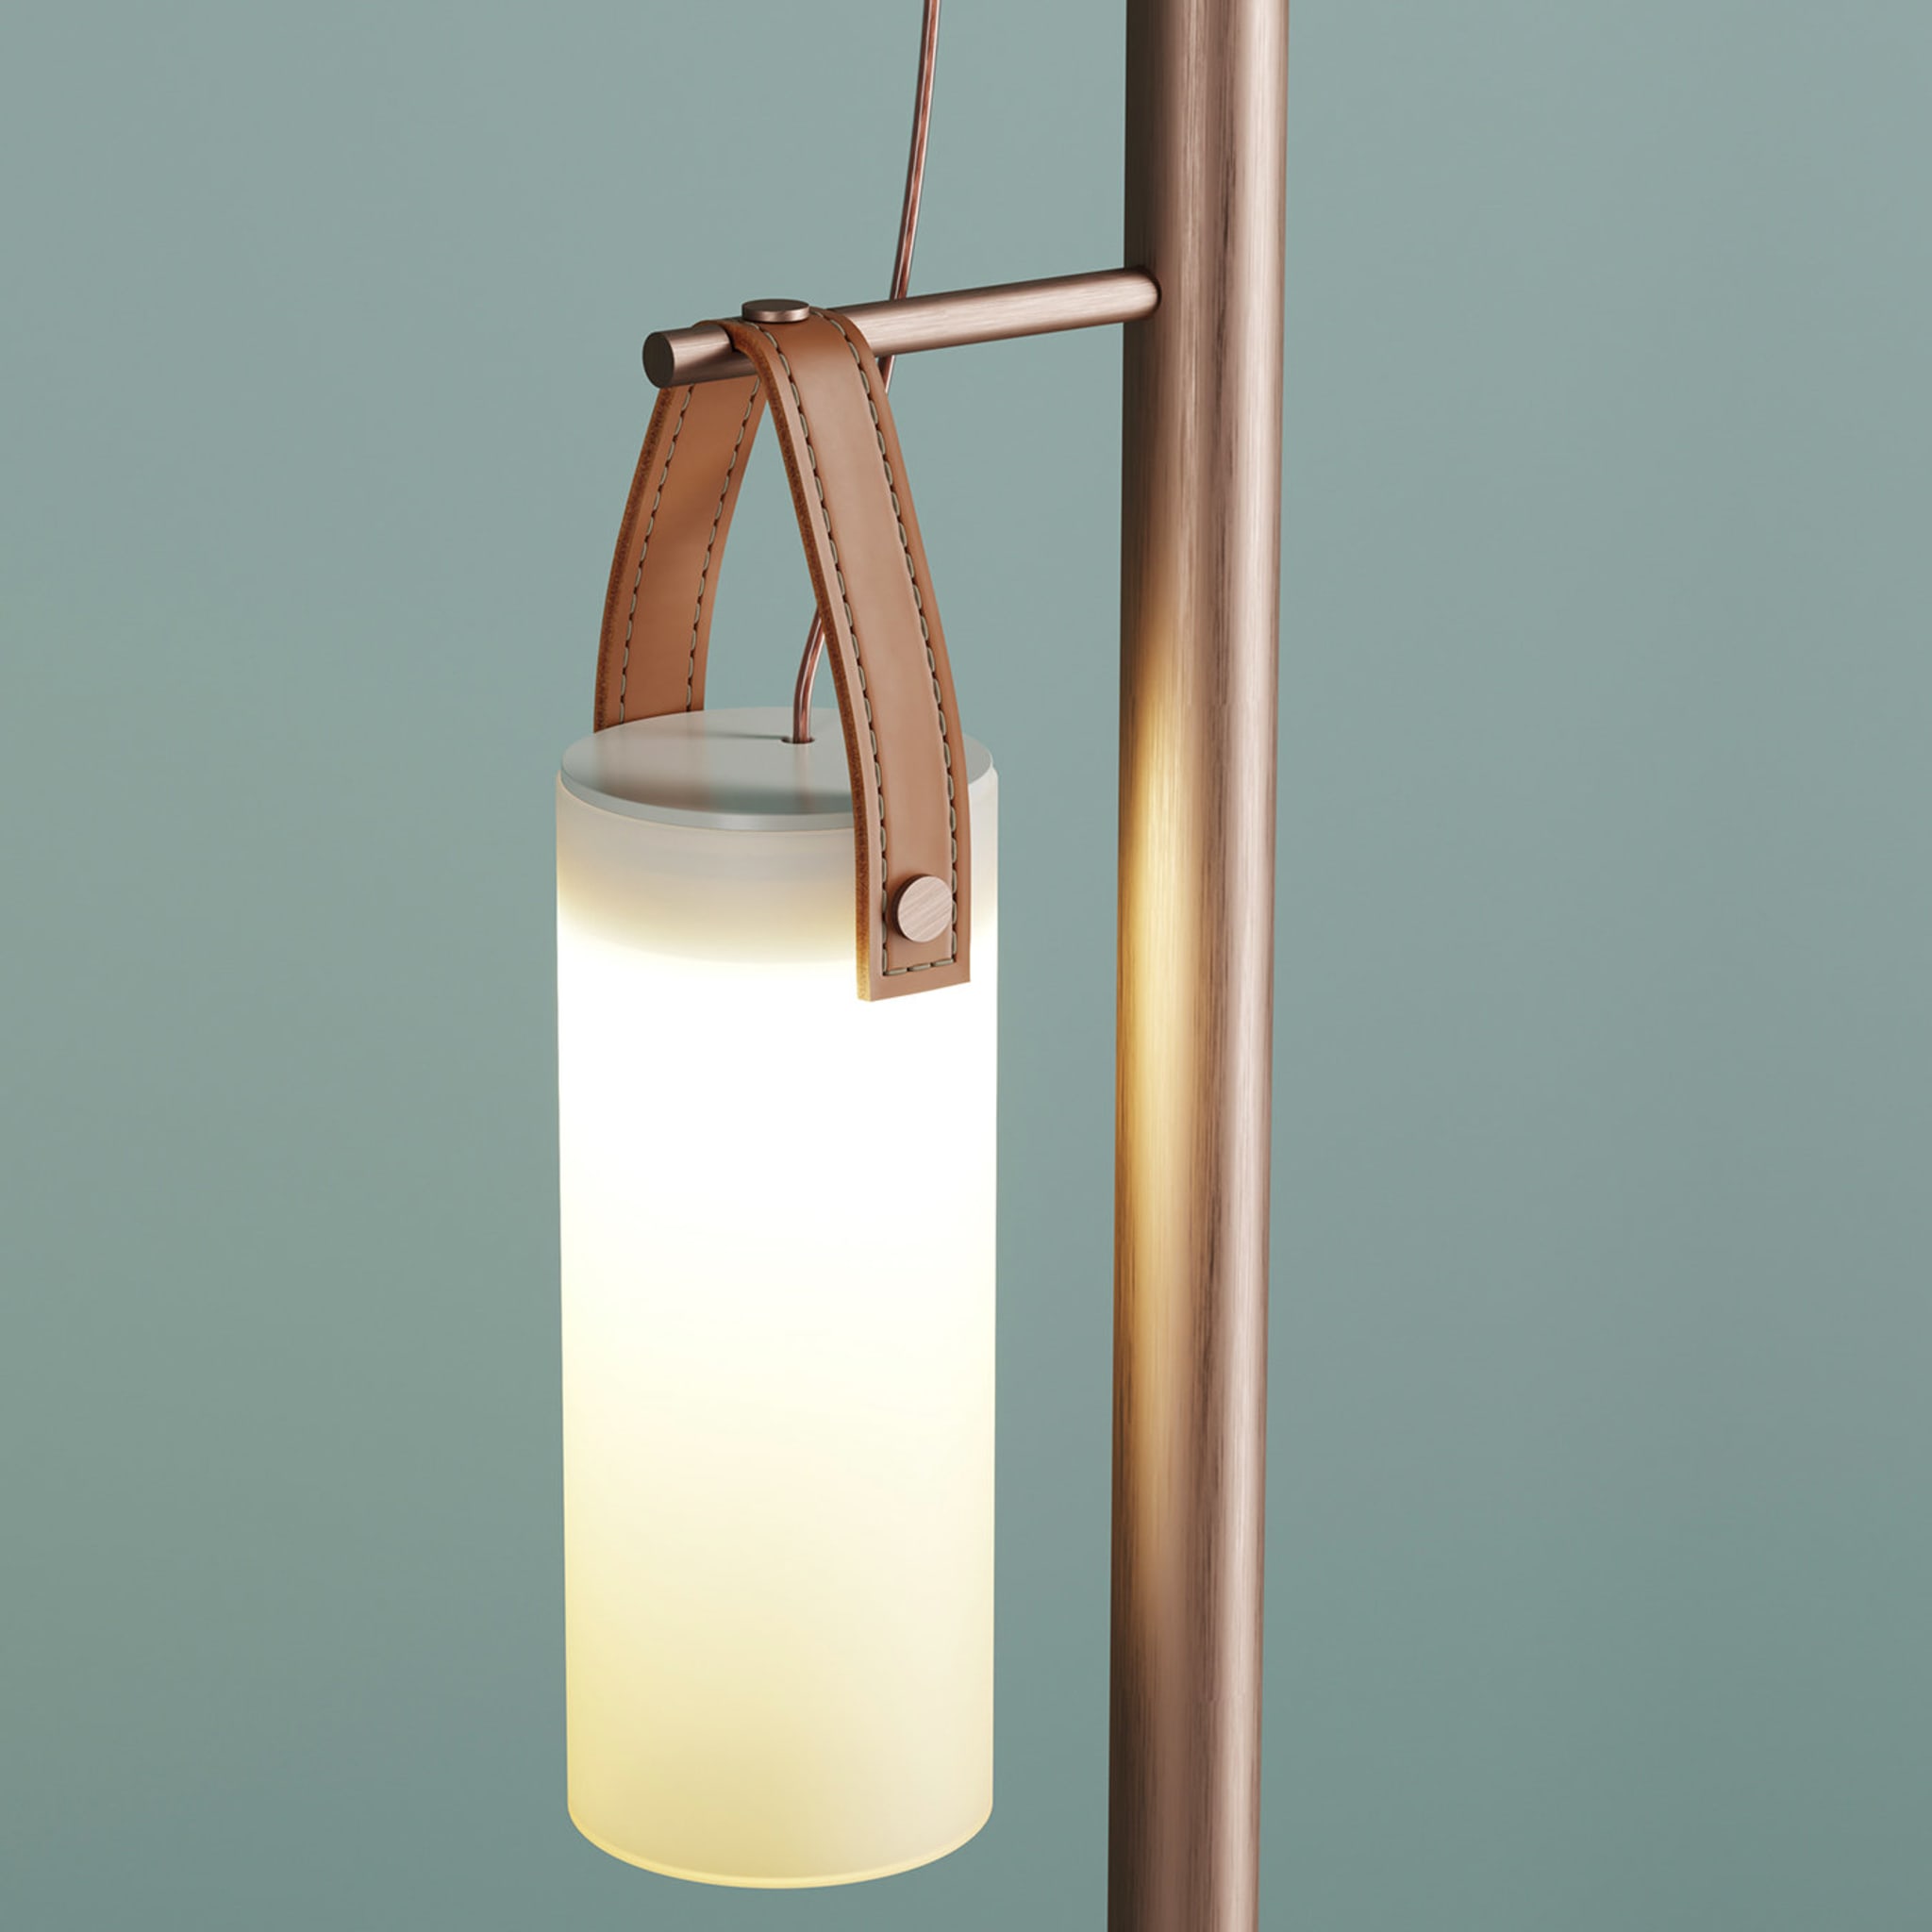 Galerie 1-Diffuser Floor Lamp by Federico Peri - Alternative view 1